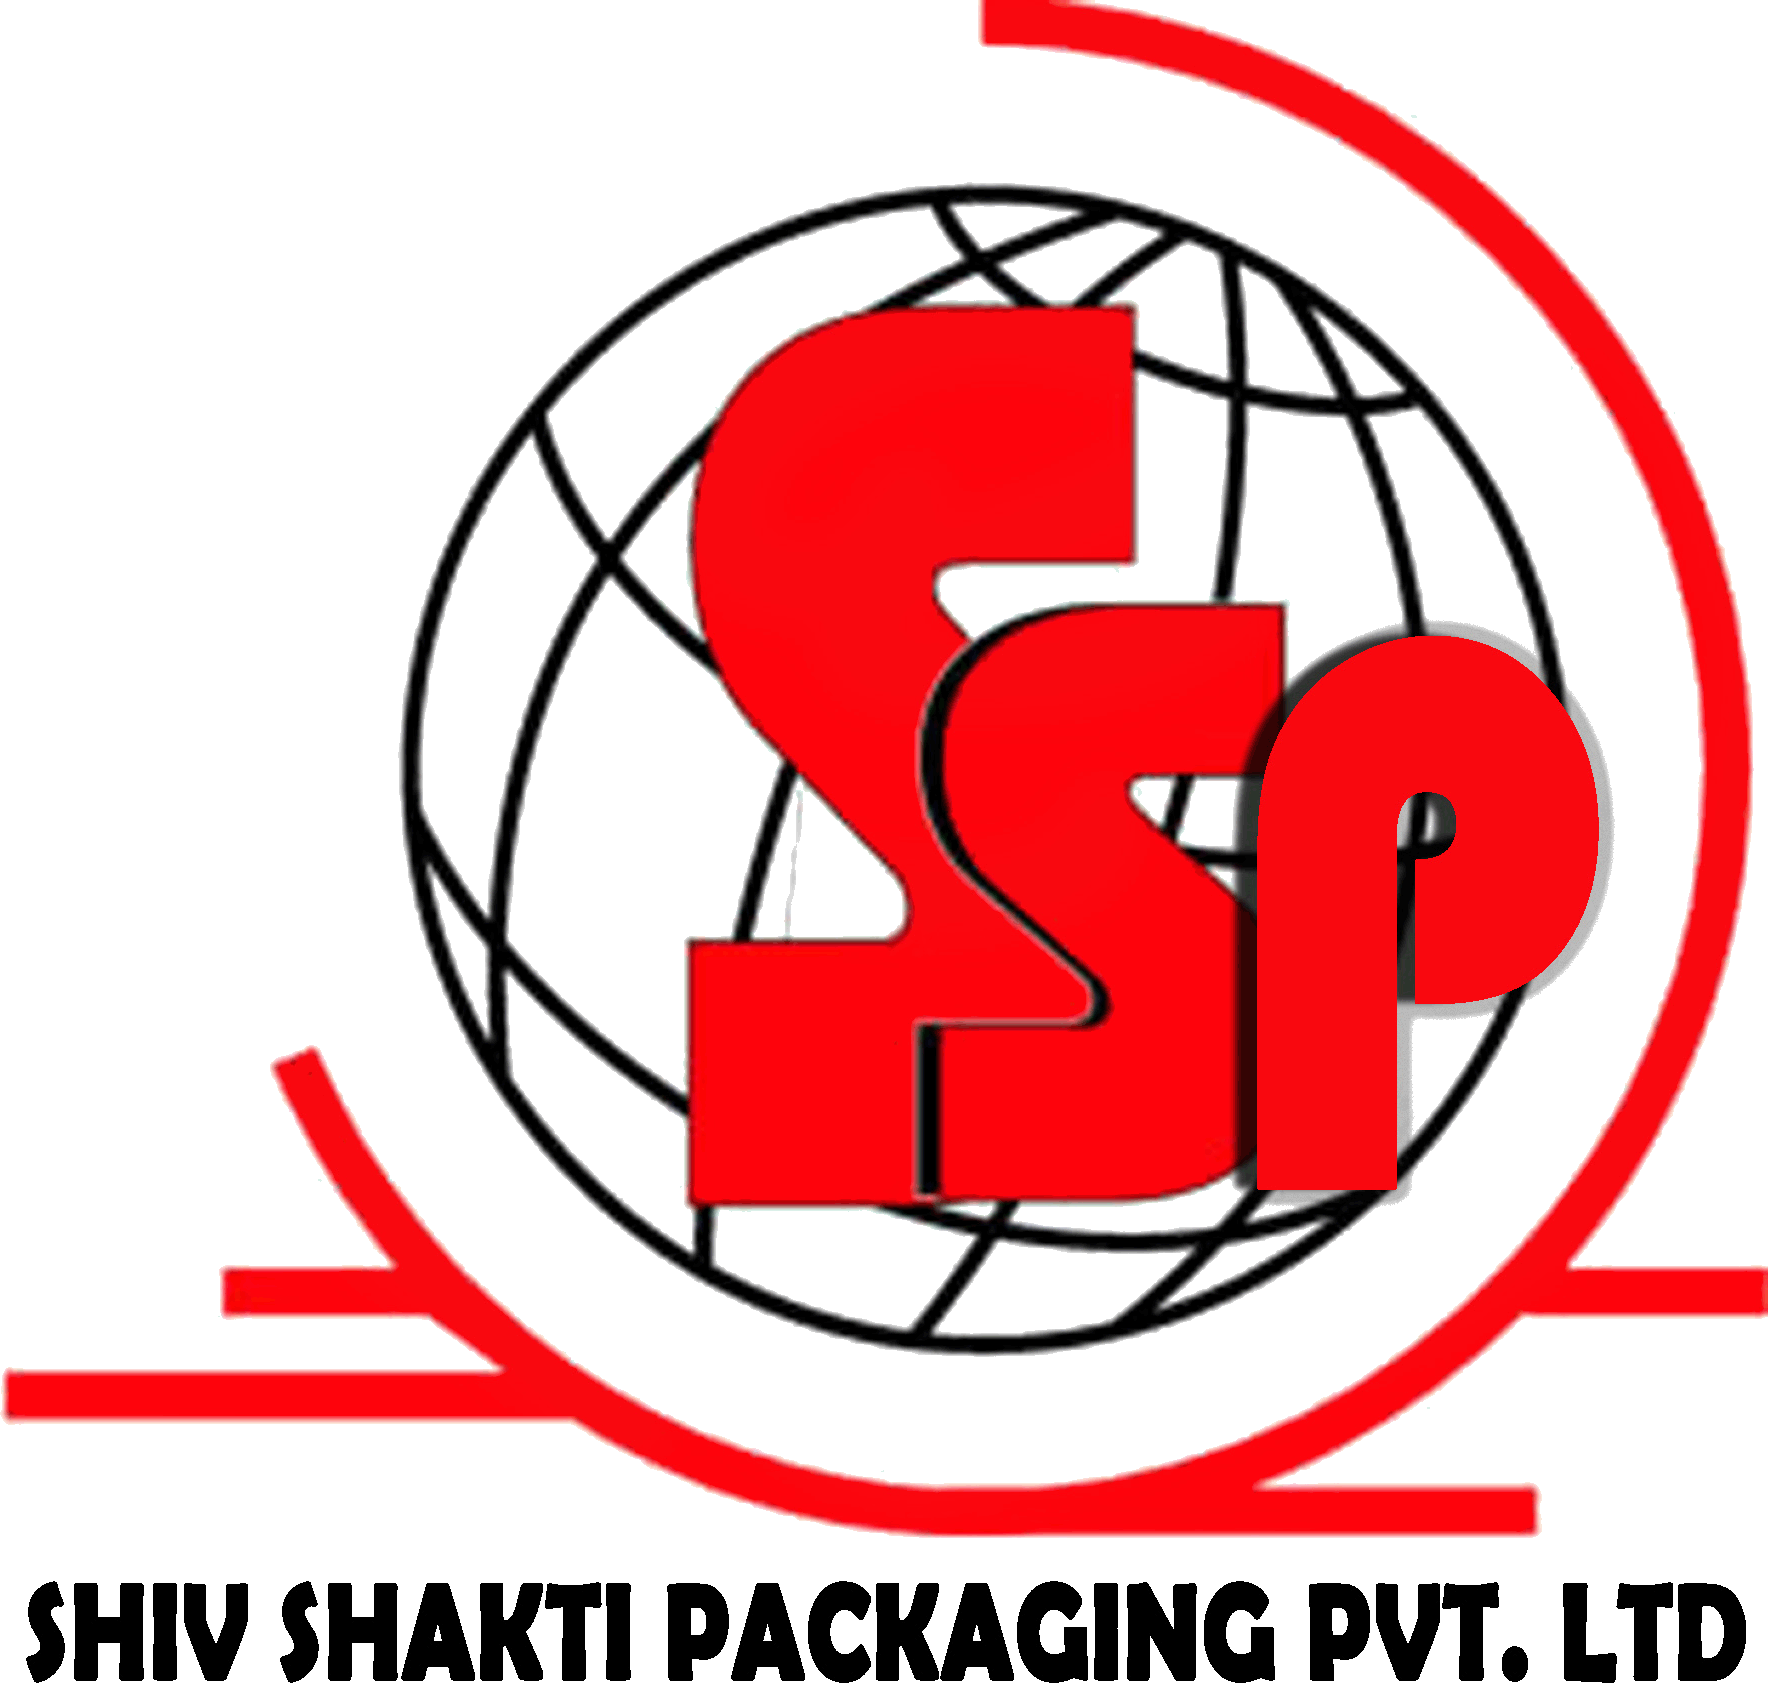 Shiv Shakti Packaging Pvt. Ltd